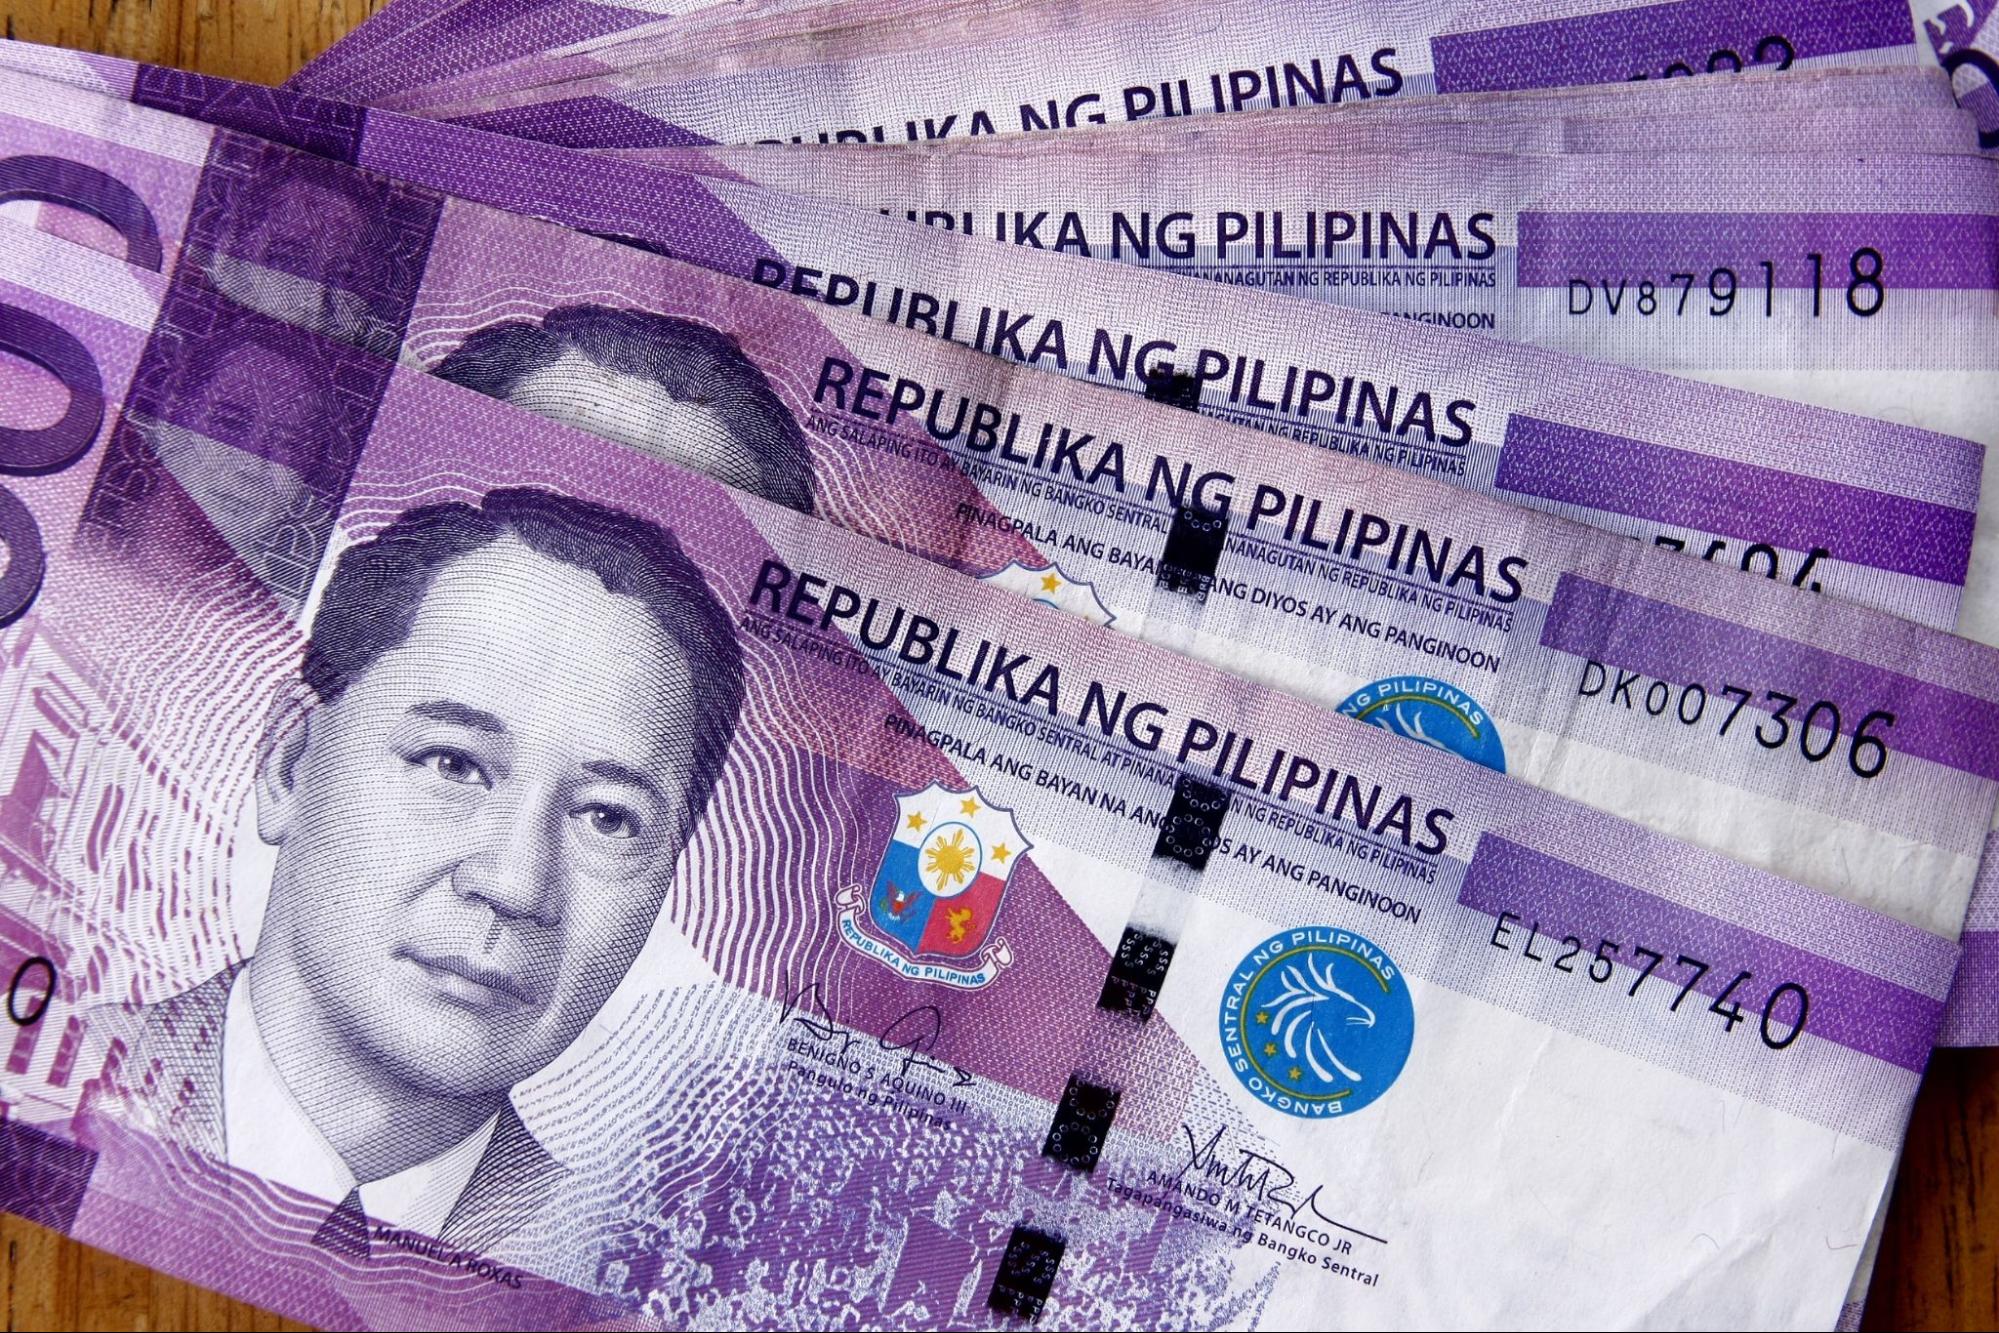 One hundred Philippine Peso bills